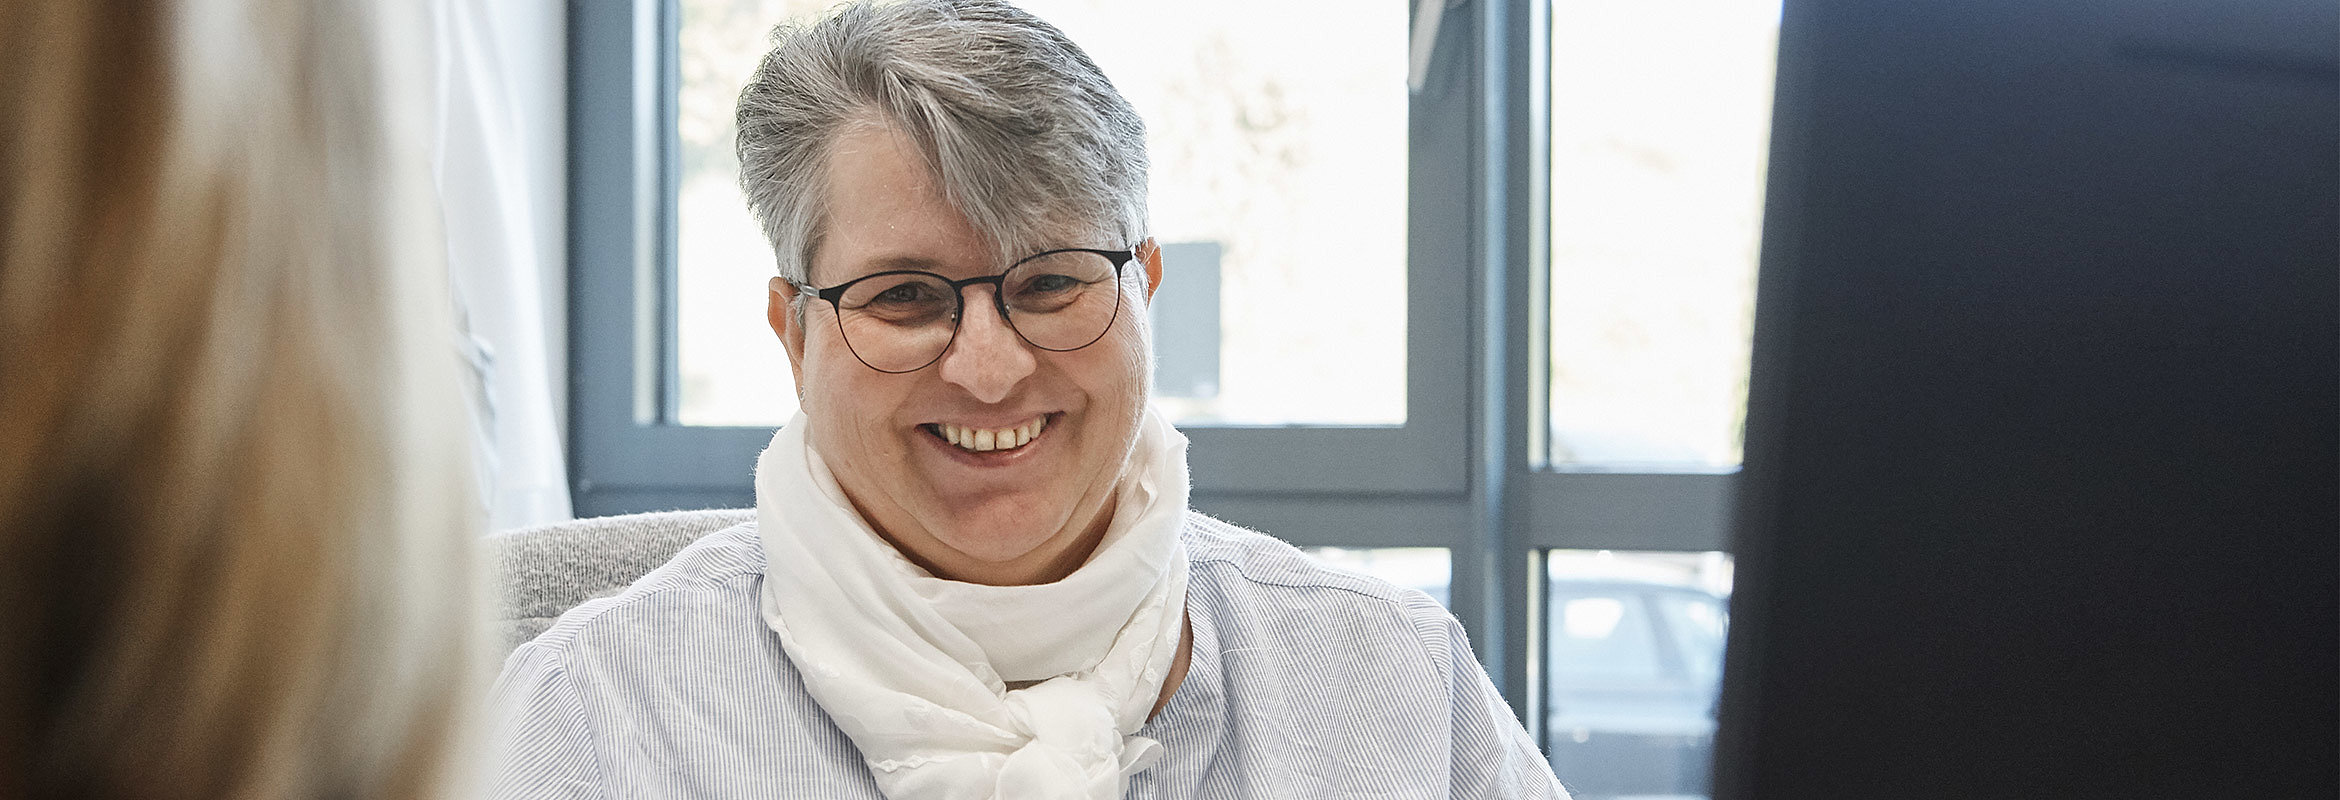 Irene Frey, Chefarztsekretärin der Klinik für Orthopädie in Kusel